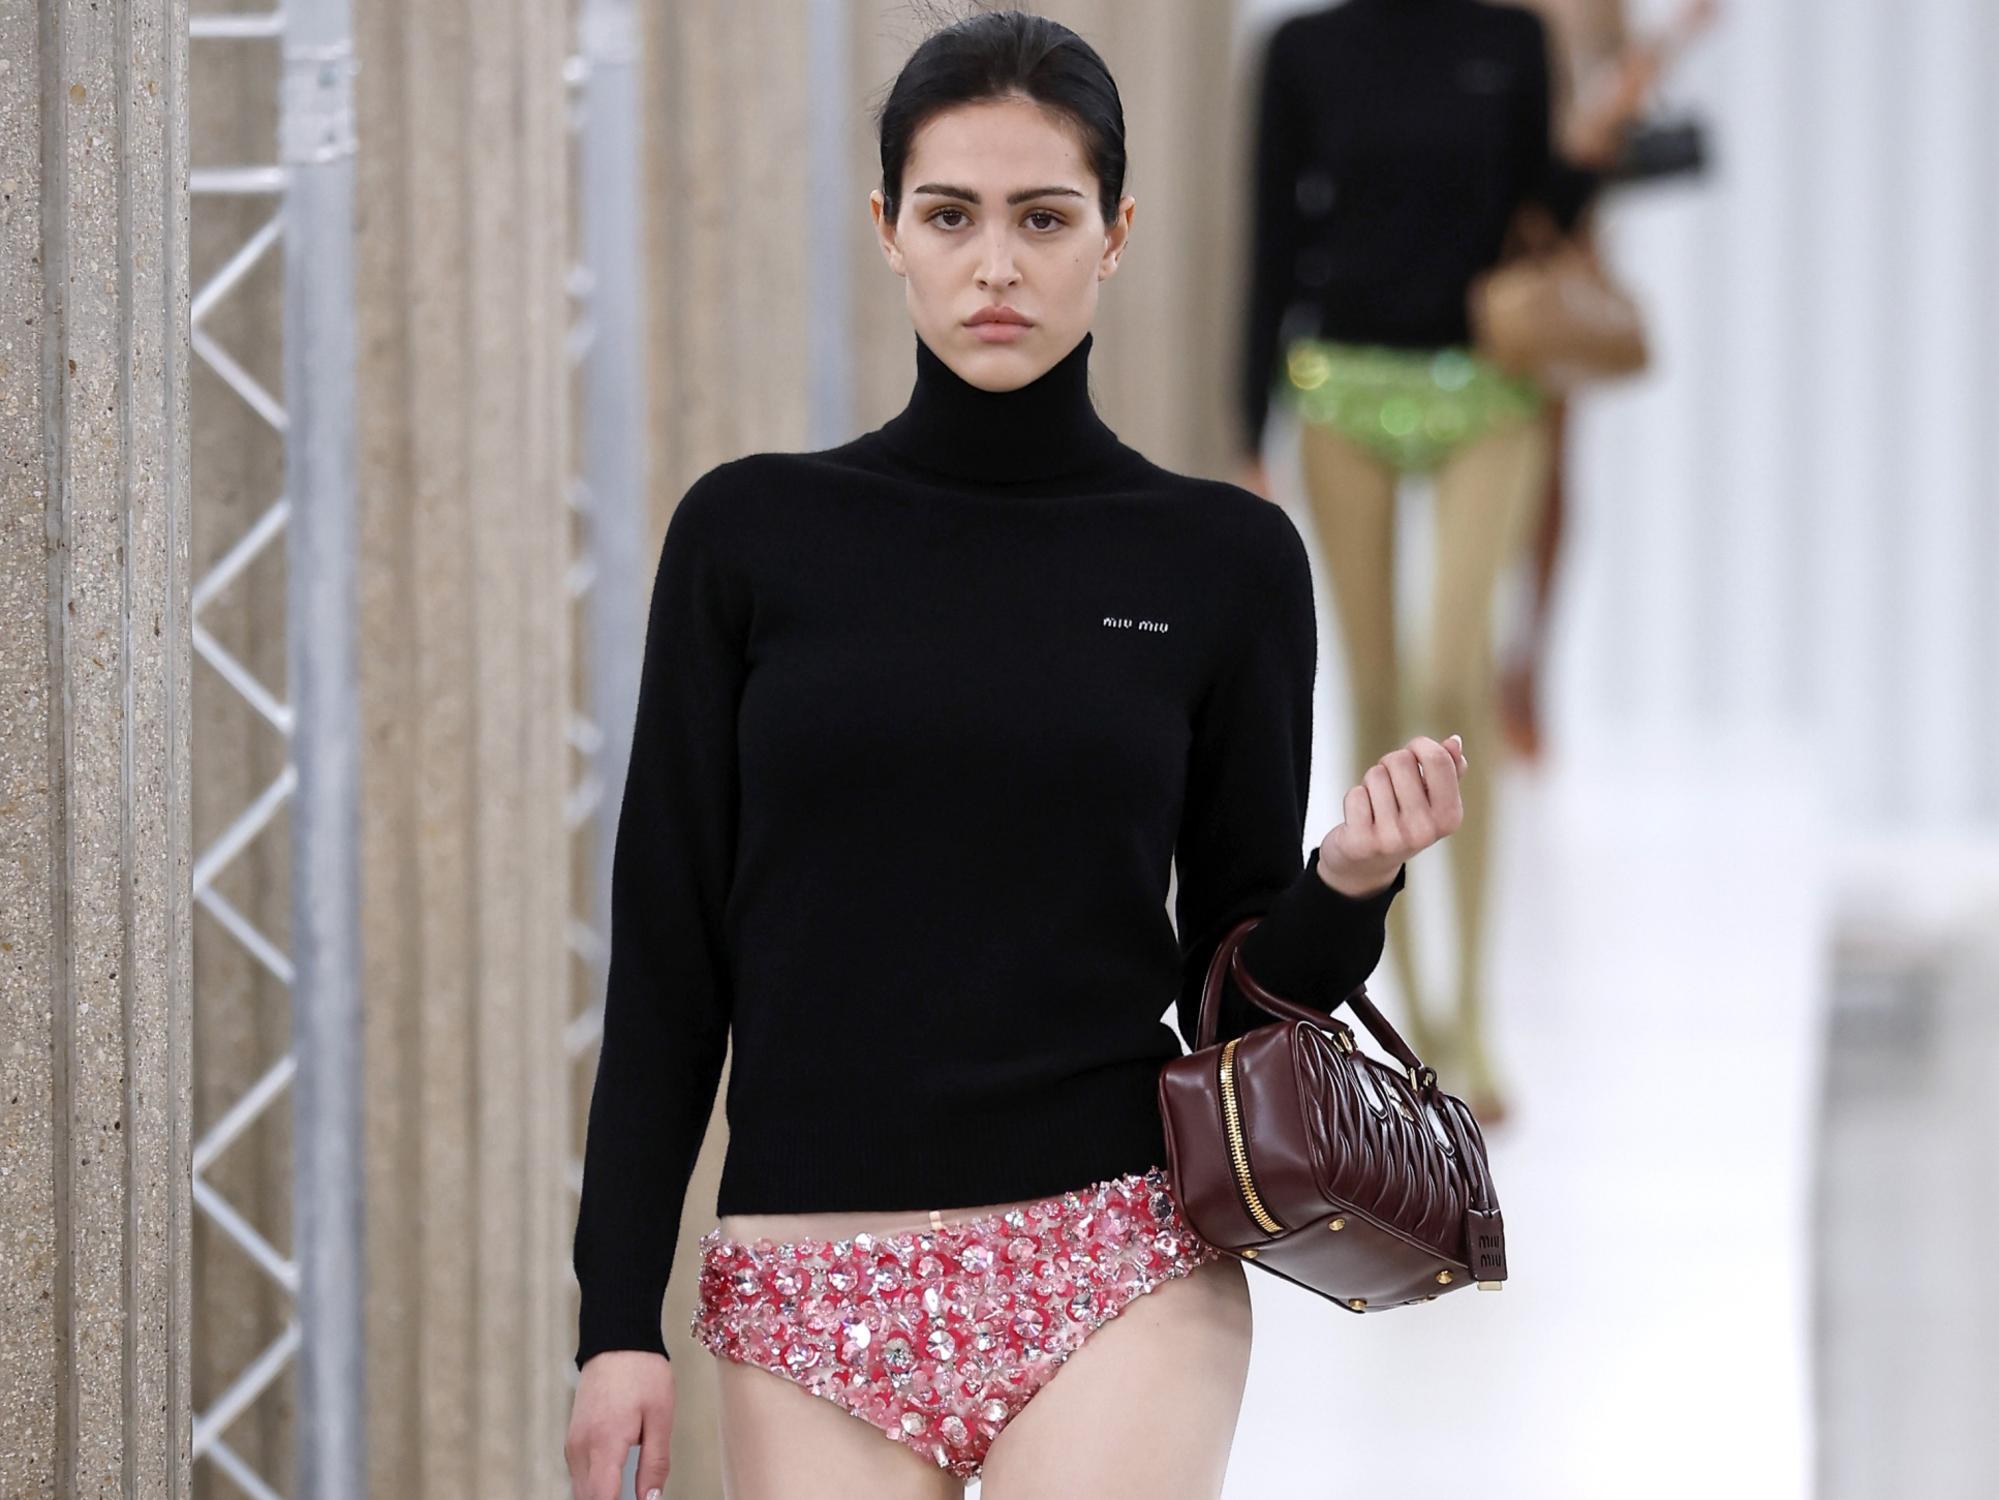 Fashion world harnesses underwear as outerwear in modern wardrobe